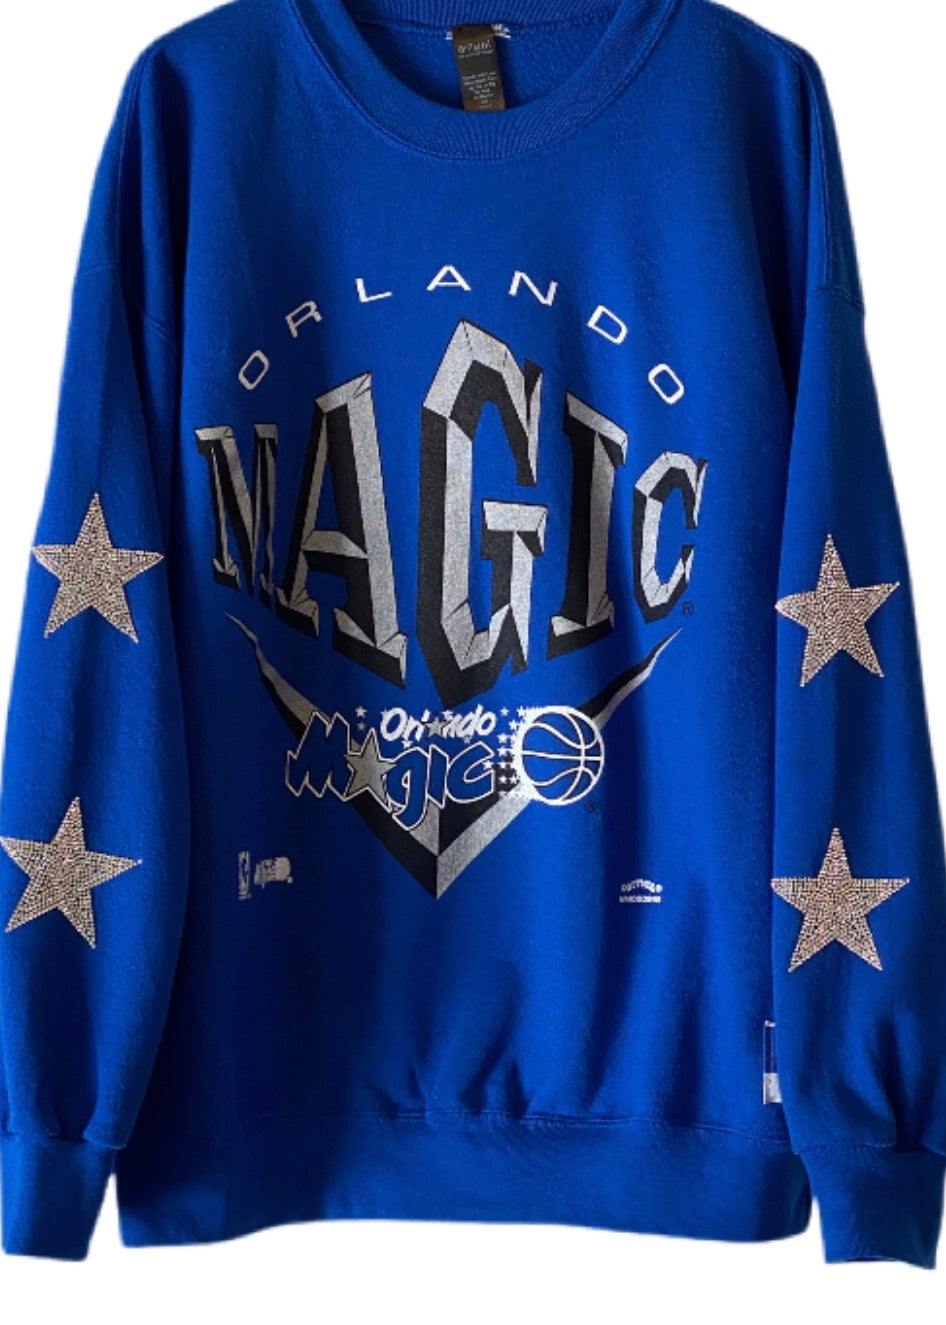 Orlando Magic, NBA One of a KIND Vintage Sweatshirt with Crystal Star Design